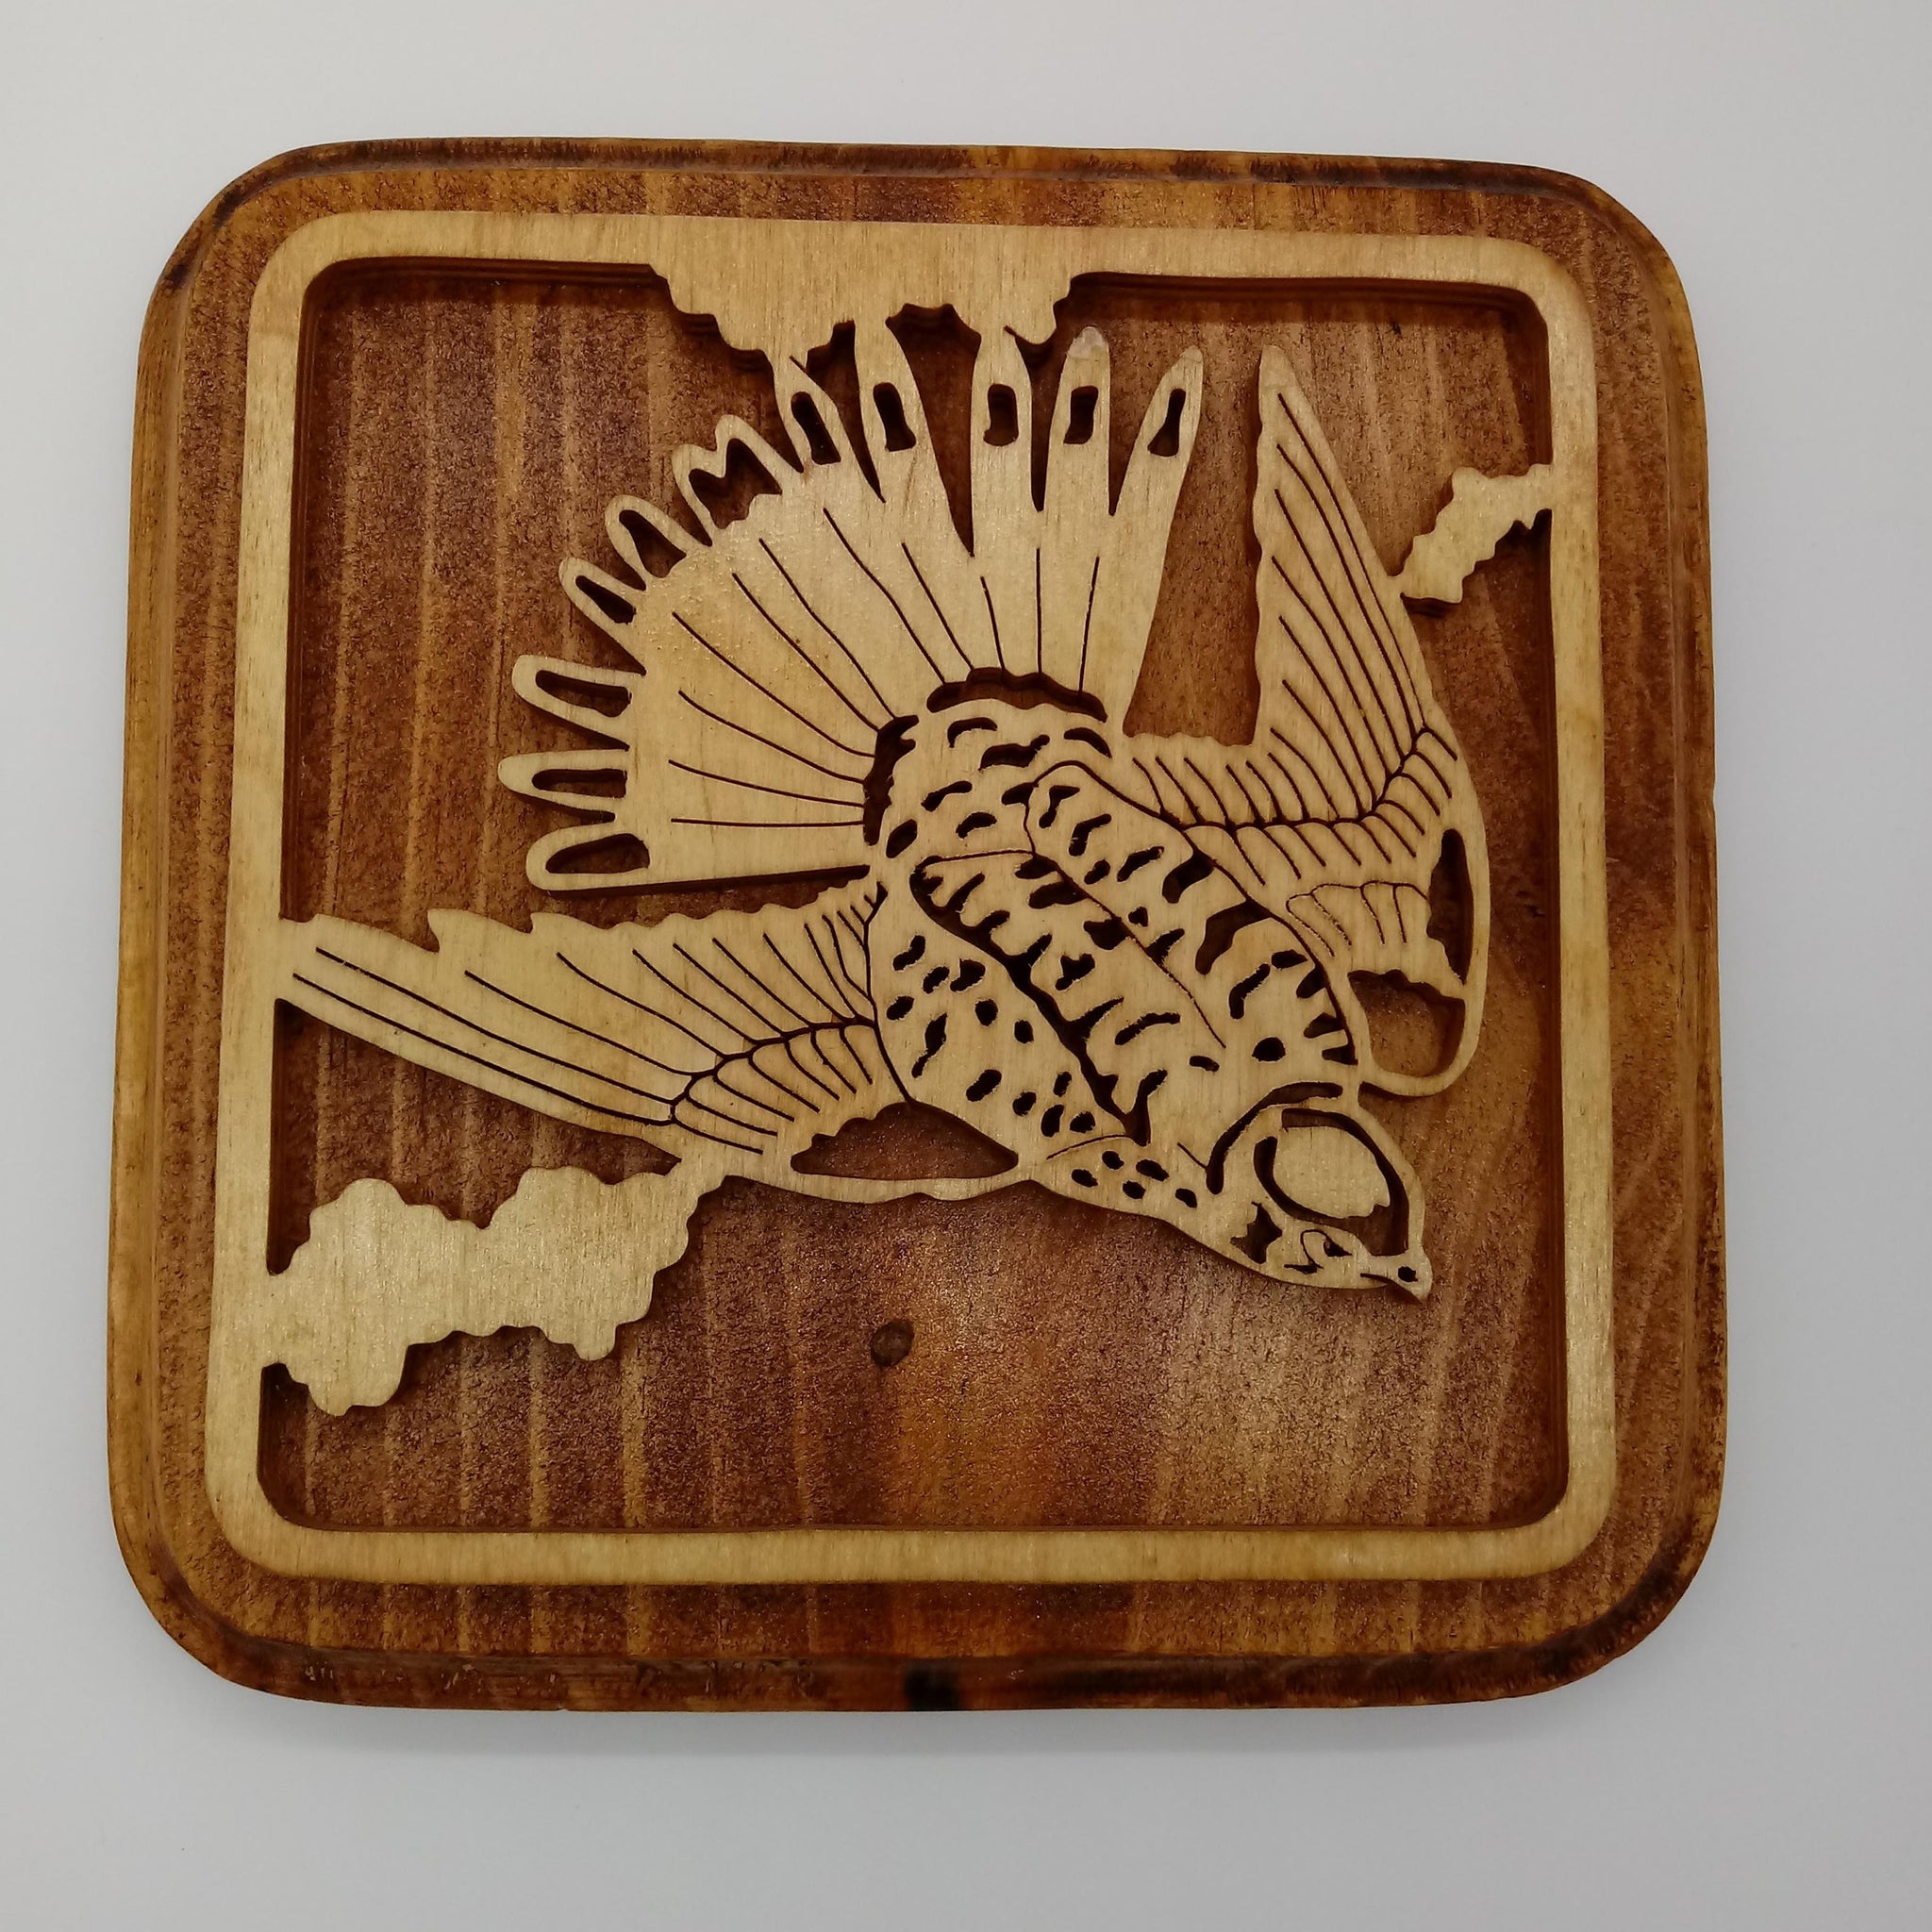 American Sparrow Hawk Plaque - Kripp's Kreations